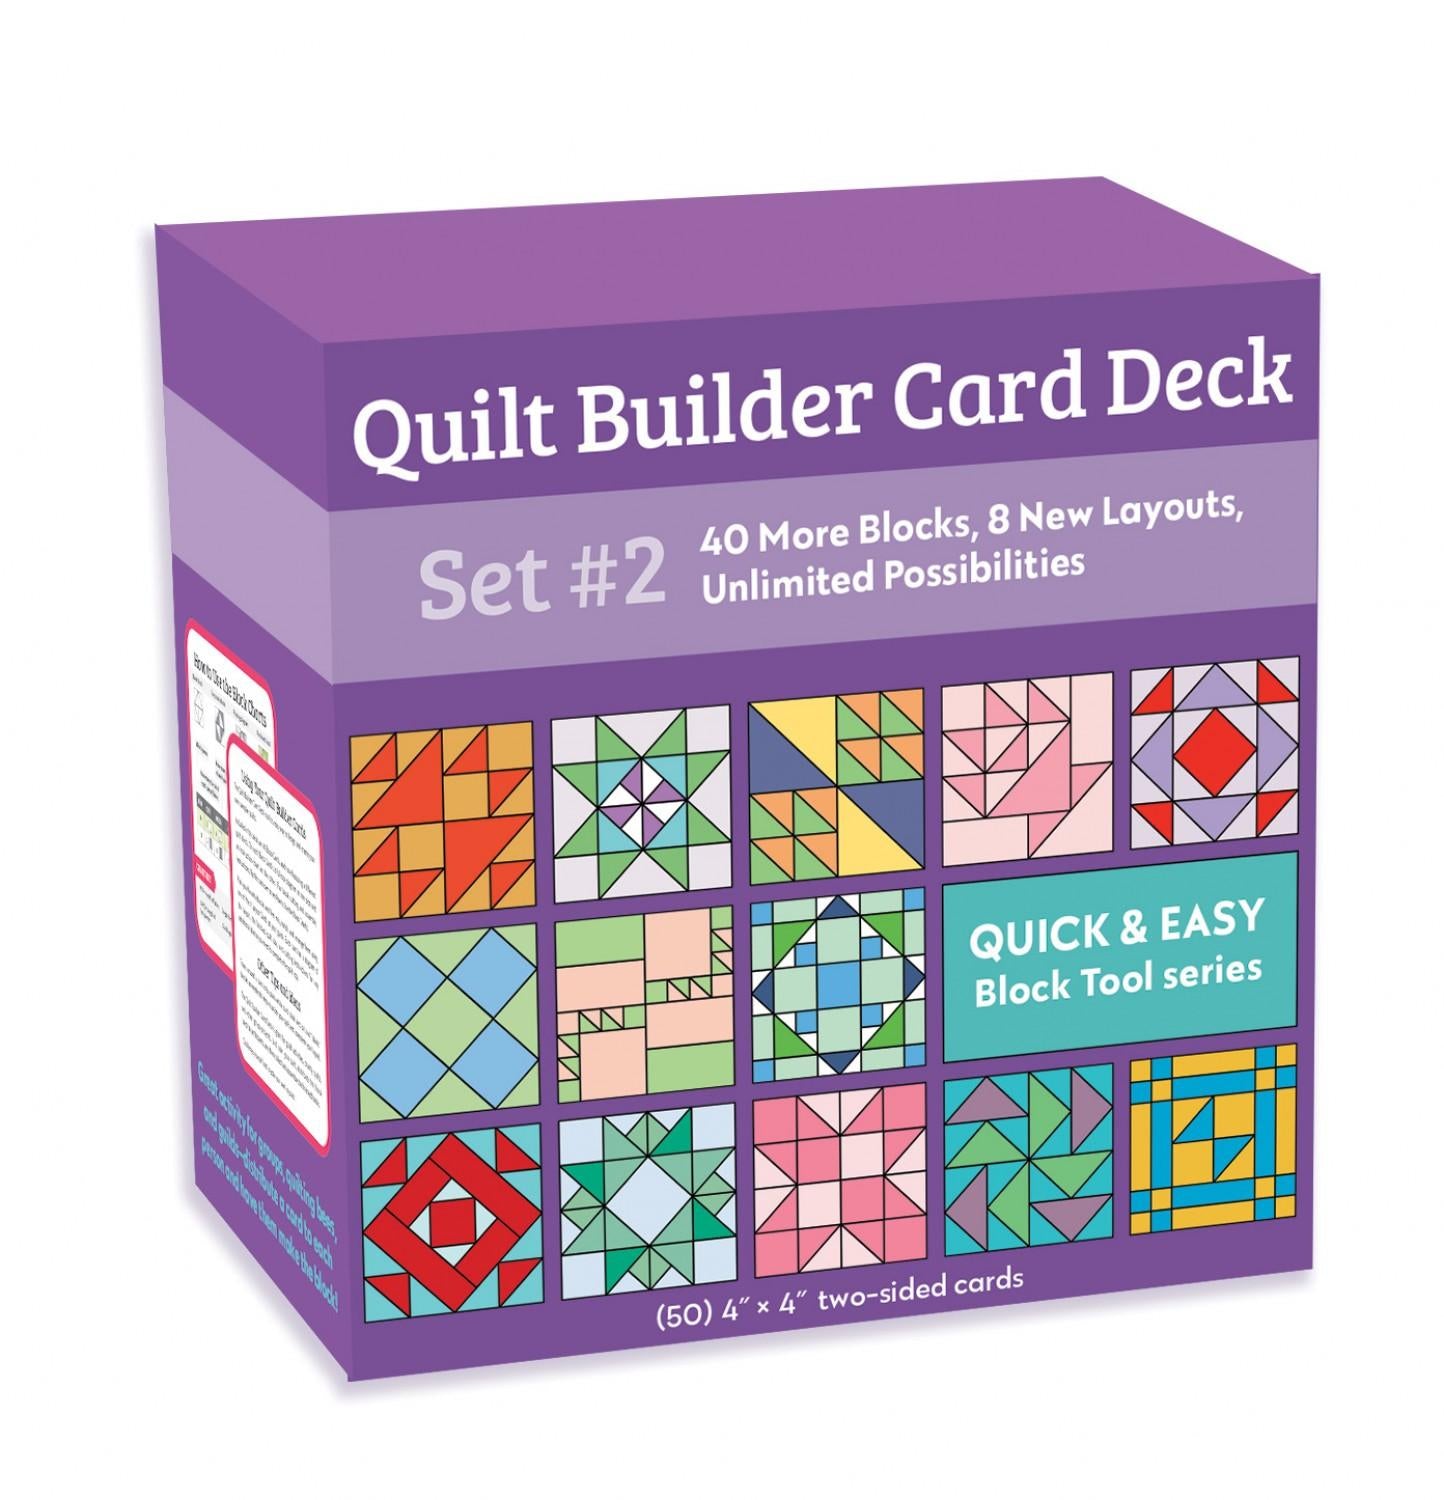 Quilt Builder Card Deck#2